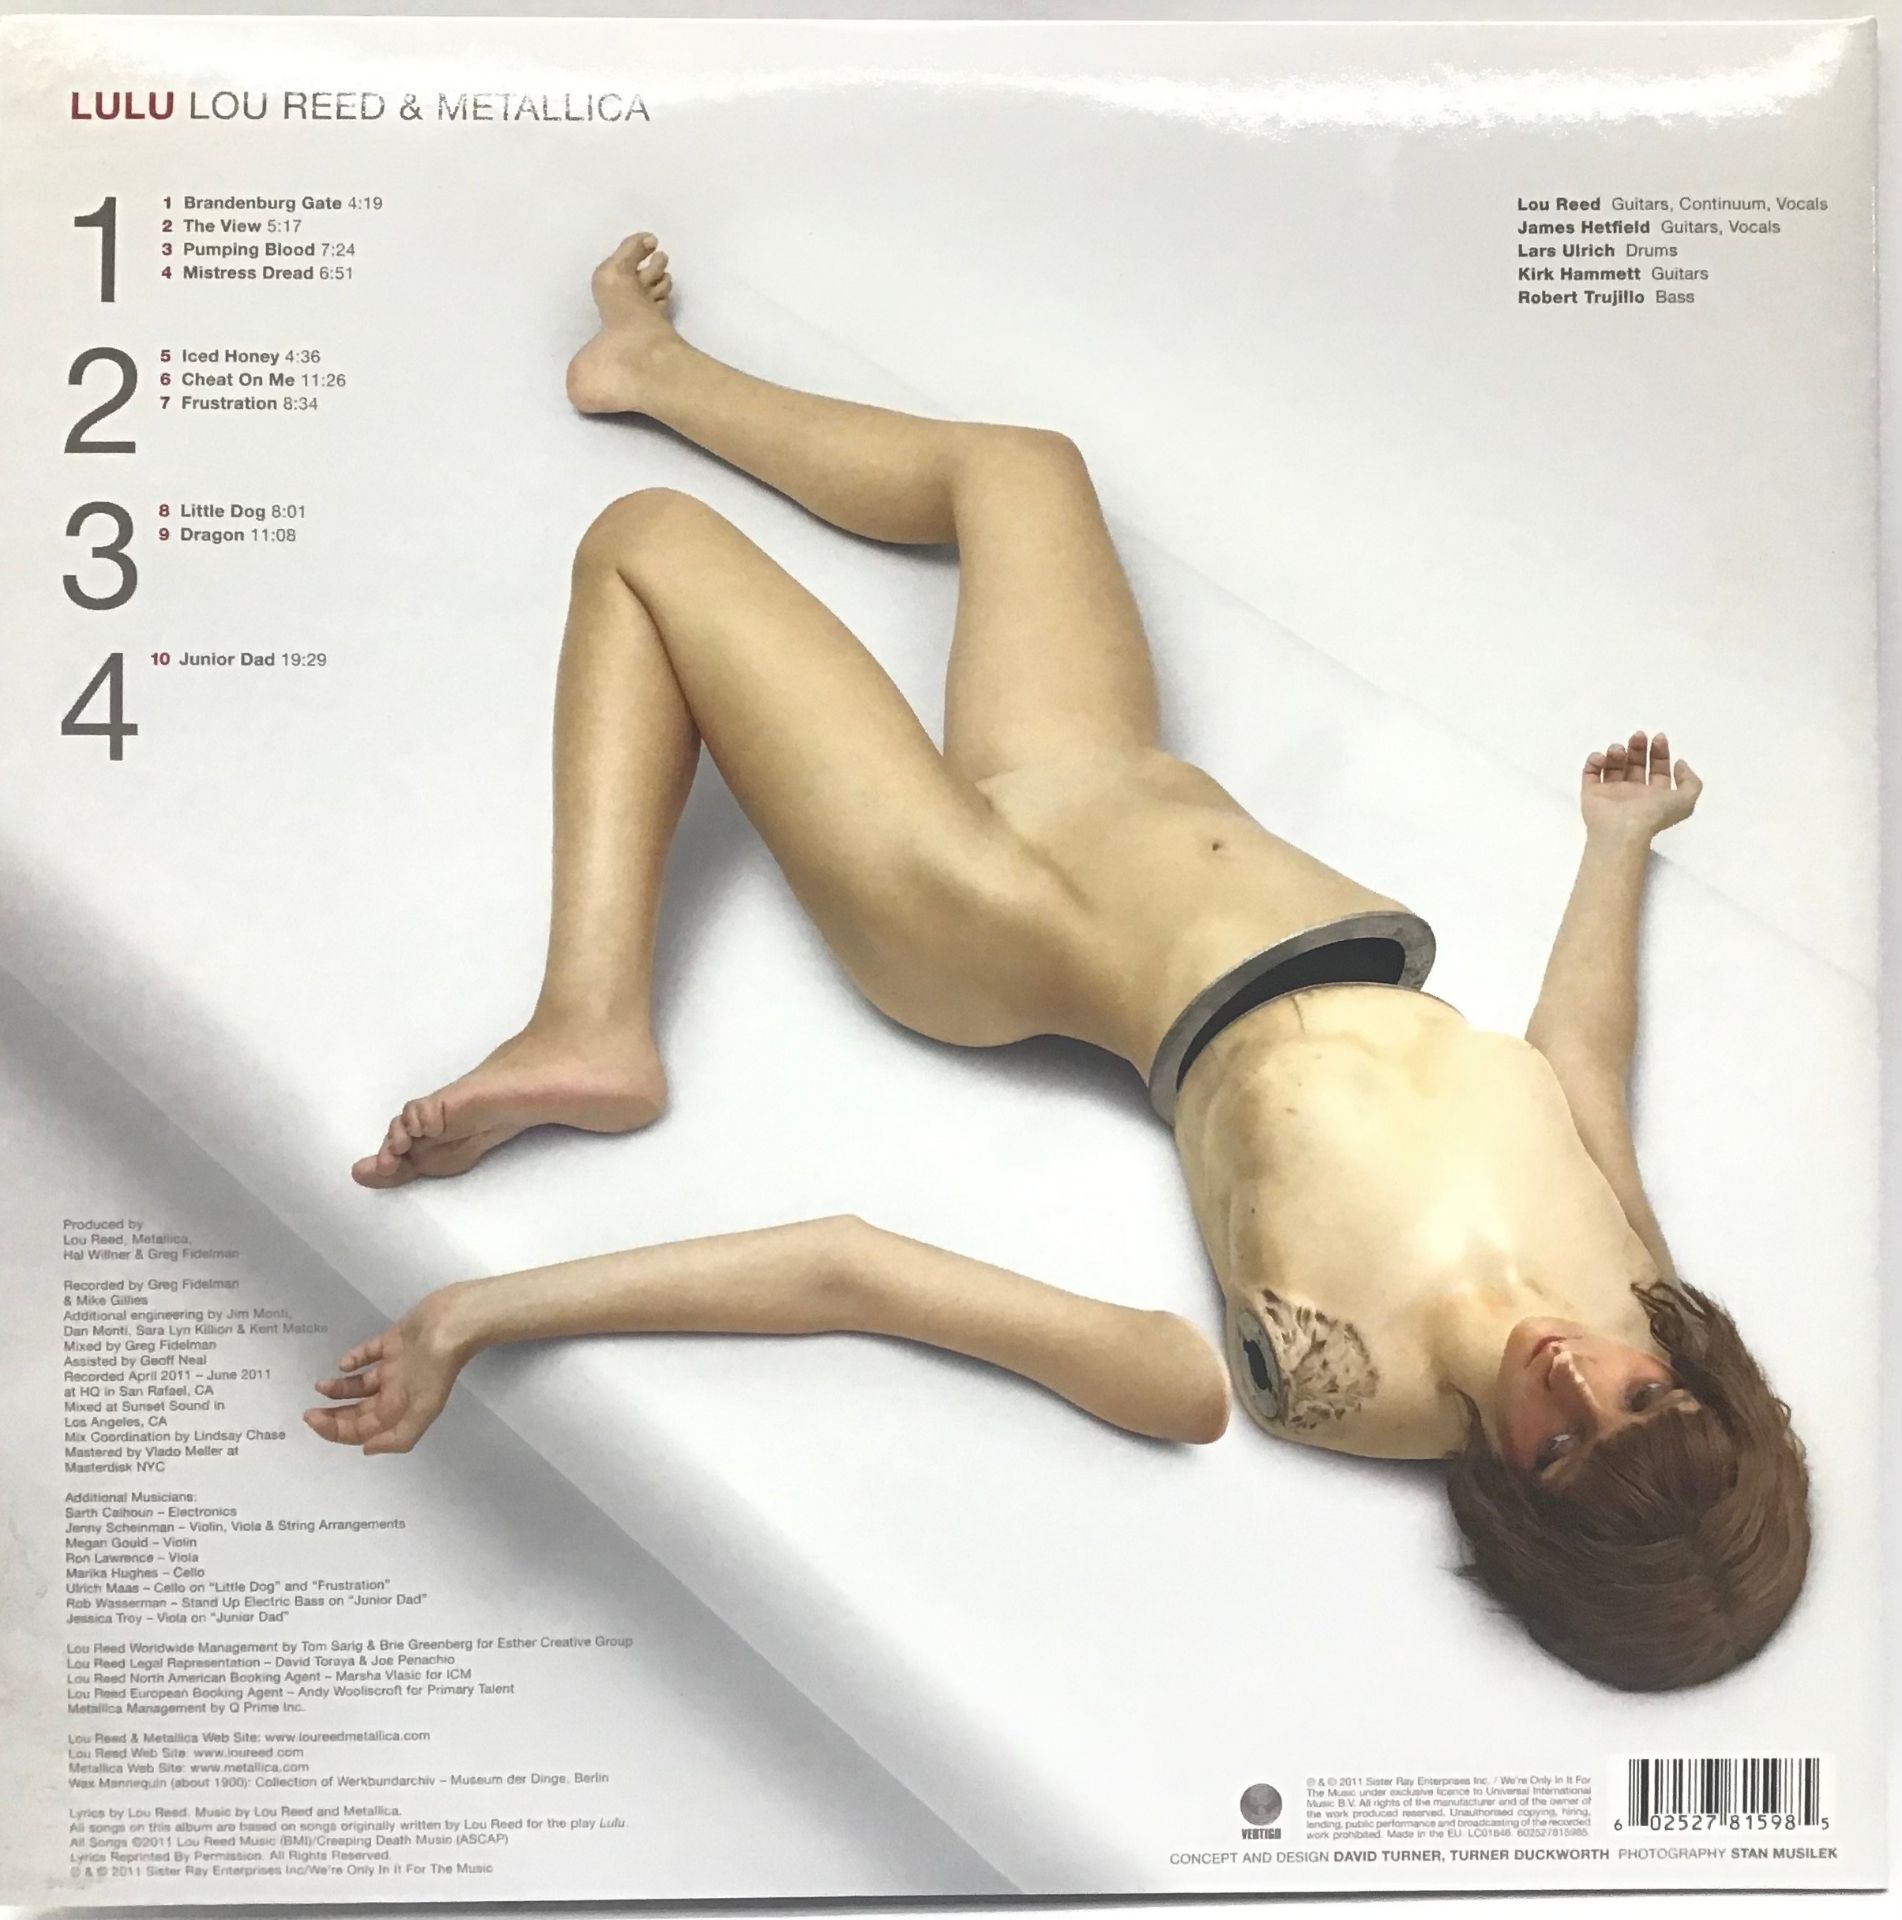 LOU REED & METALLICA - LULU - RARE LP RECORD. This double album is found here on Vertigo Records - Image 2 of 4